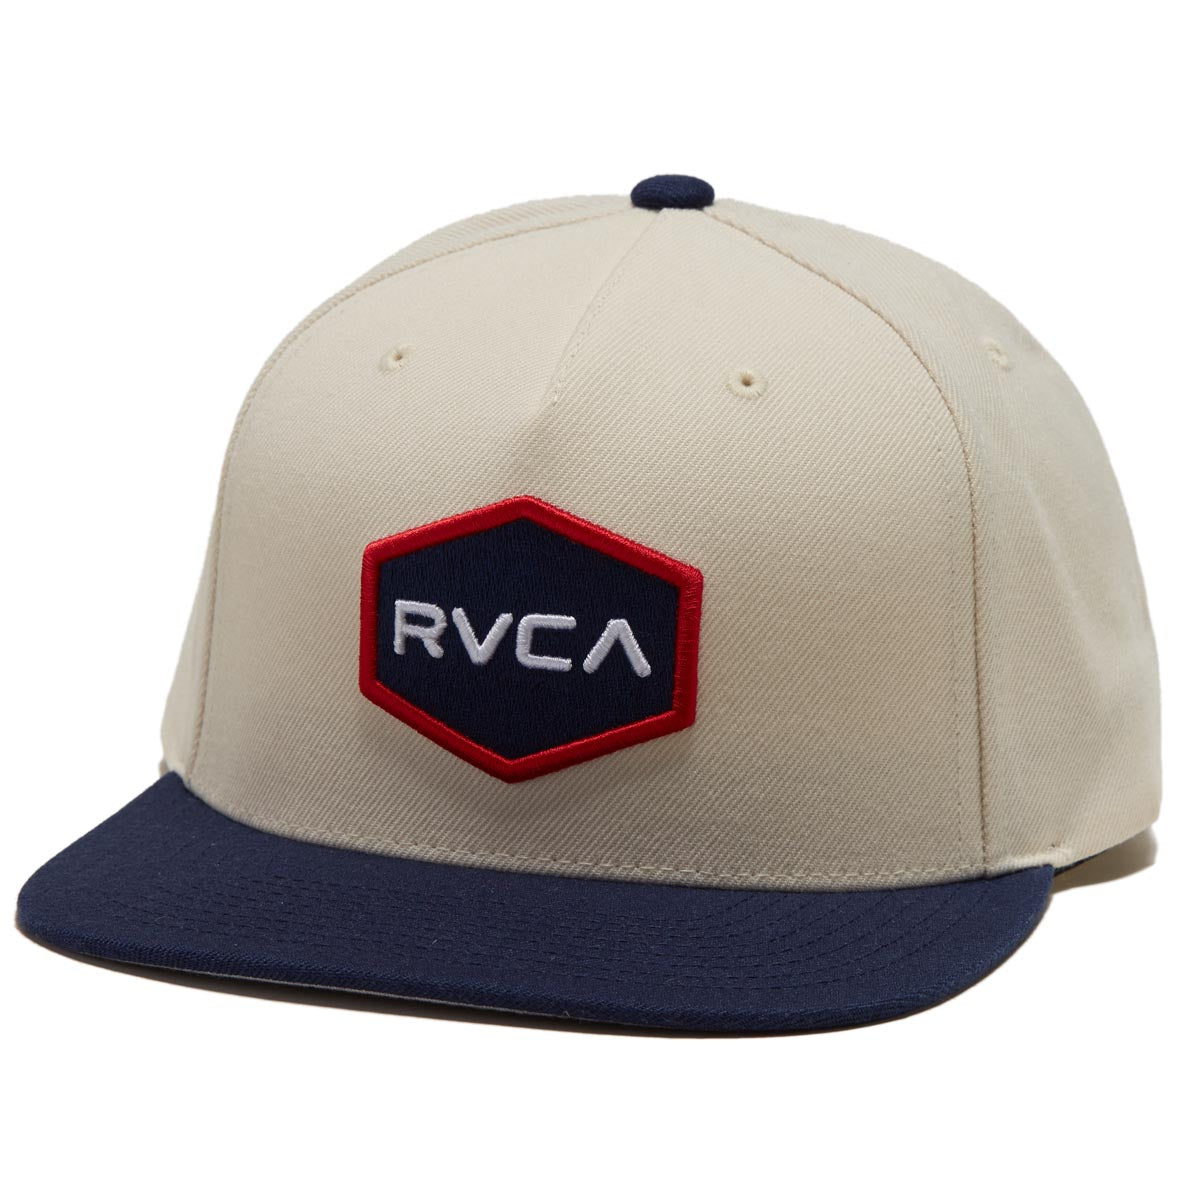 RVCA Commonwealth Snapback Hat - Navy White image 1